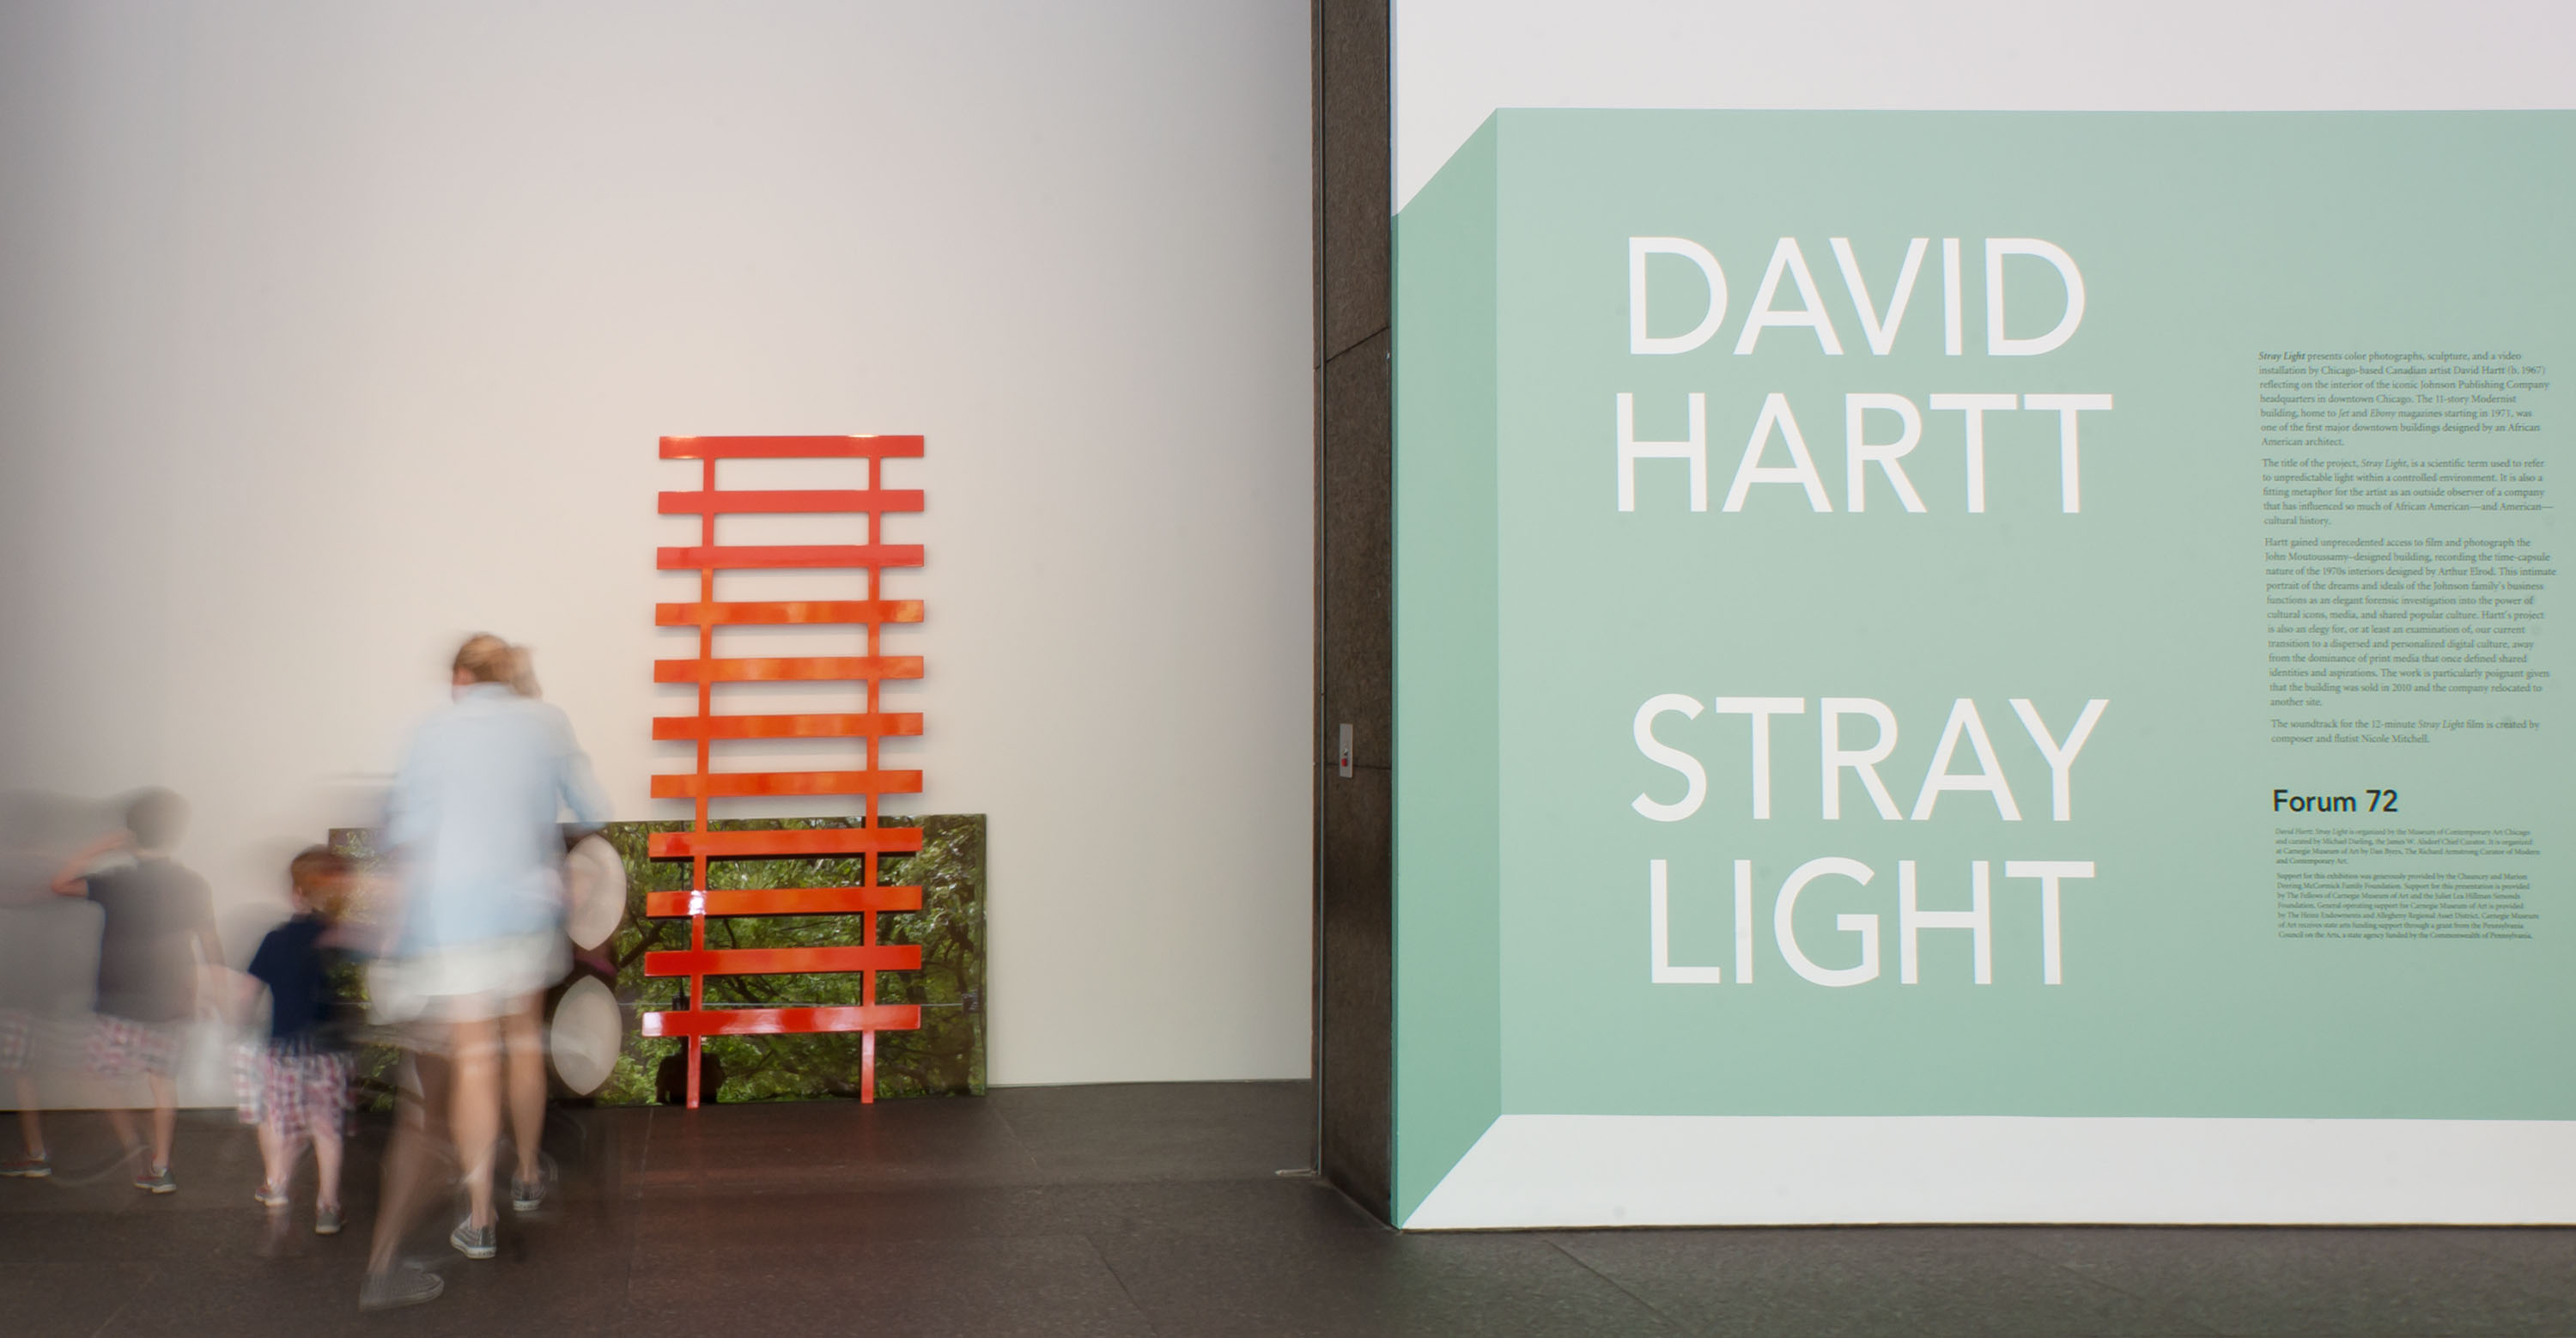 David Hartt Forum 72 Stray Light Exhibition Image